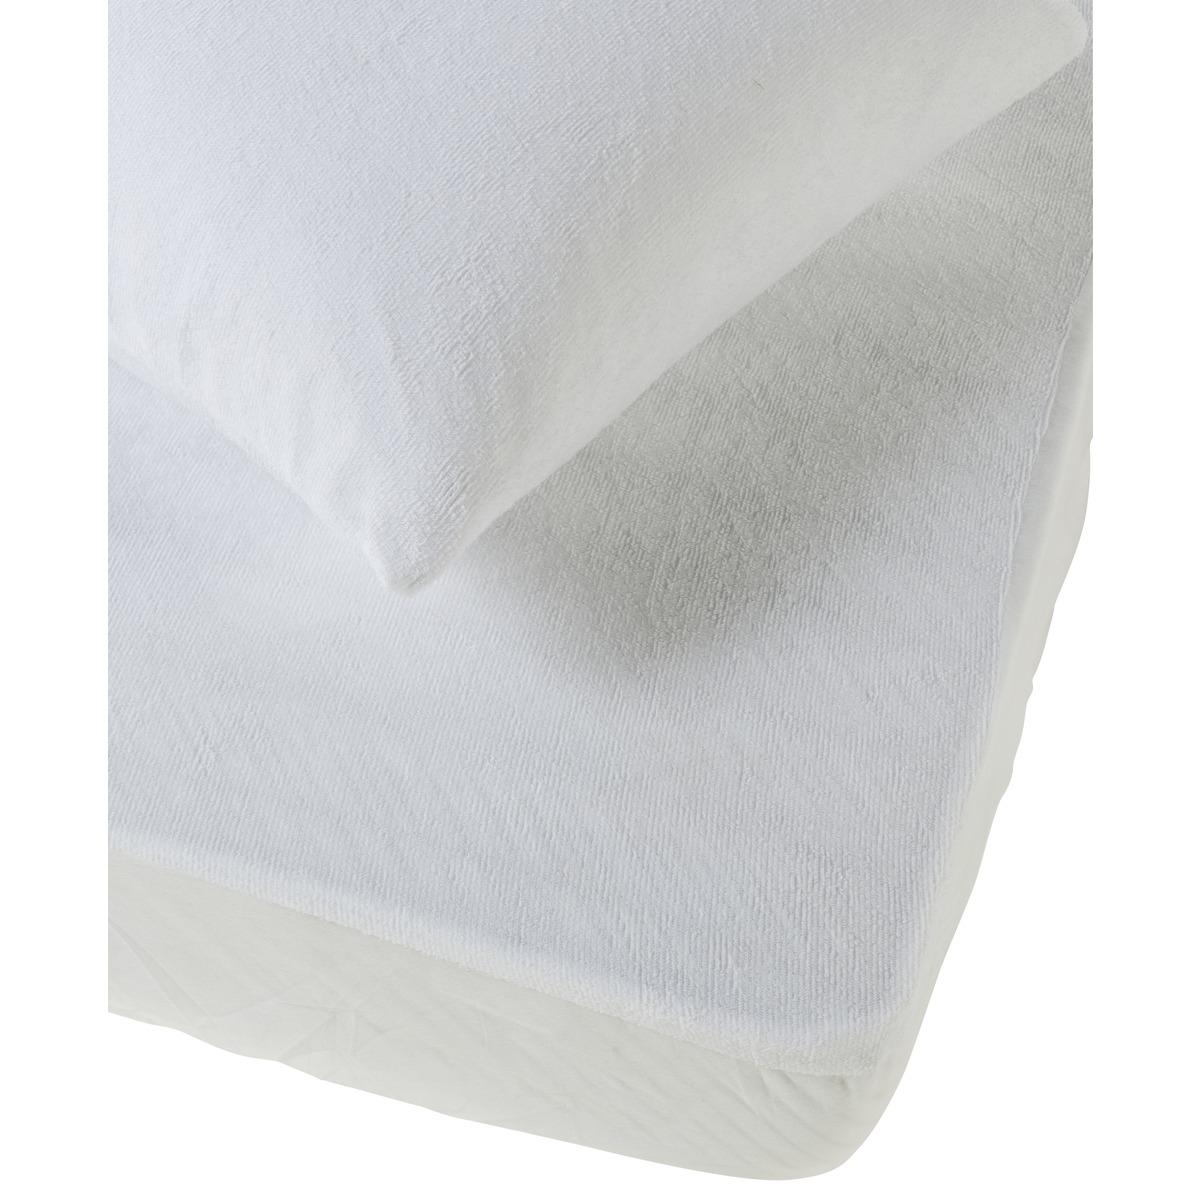 Protège-matelas absorbant + 2 protège-oreillers offerts - 140 x 190 cm - Blanc